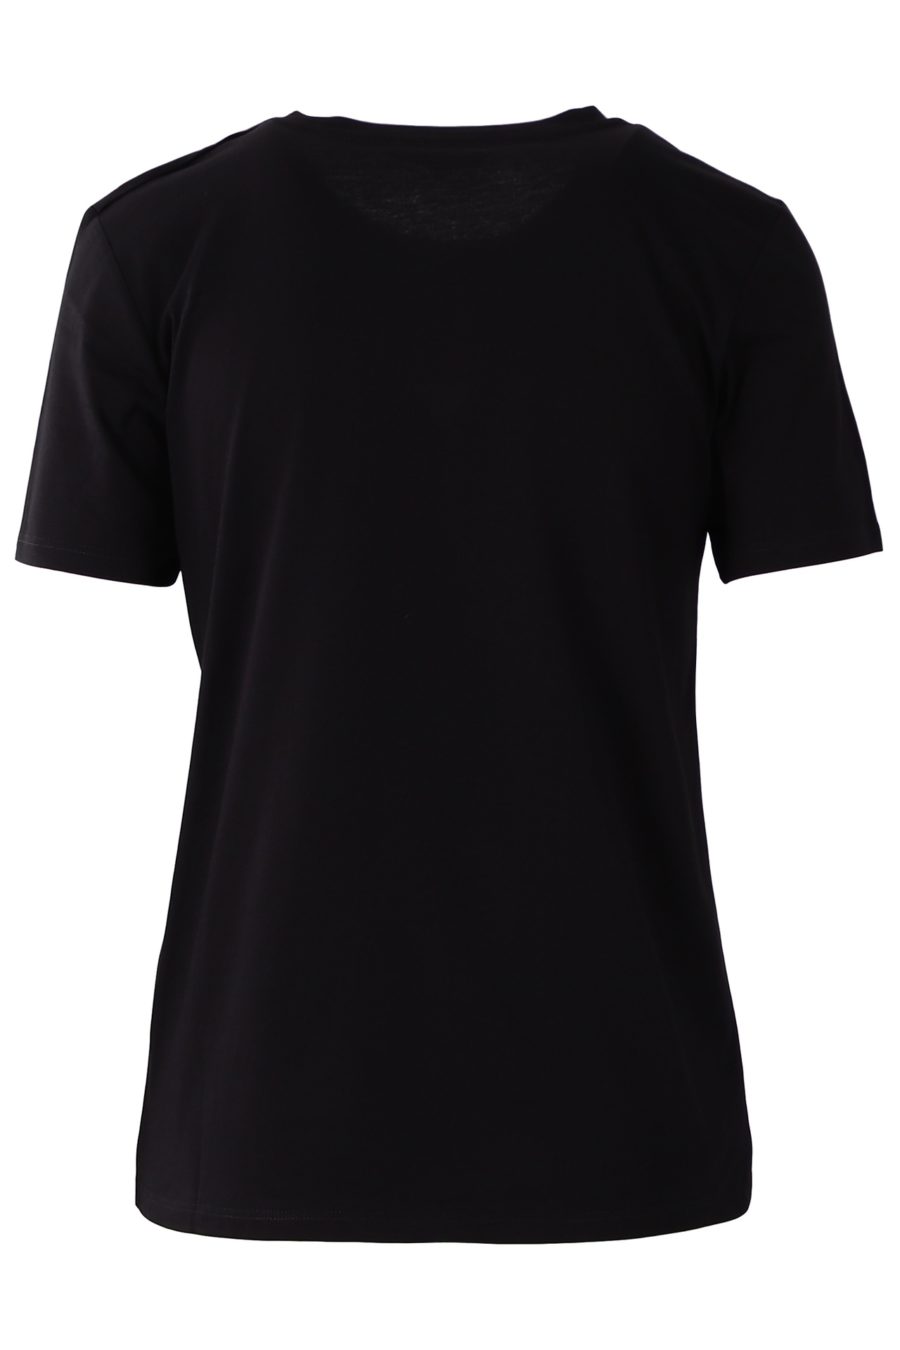 Camiseta Balmain negra con botones y logo terciopelo - 619c7fa650886fcb99c2f969110ce7b676649819